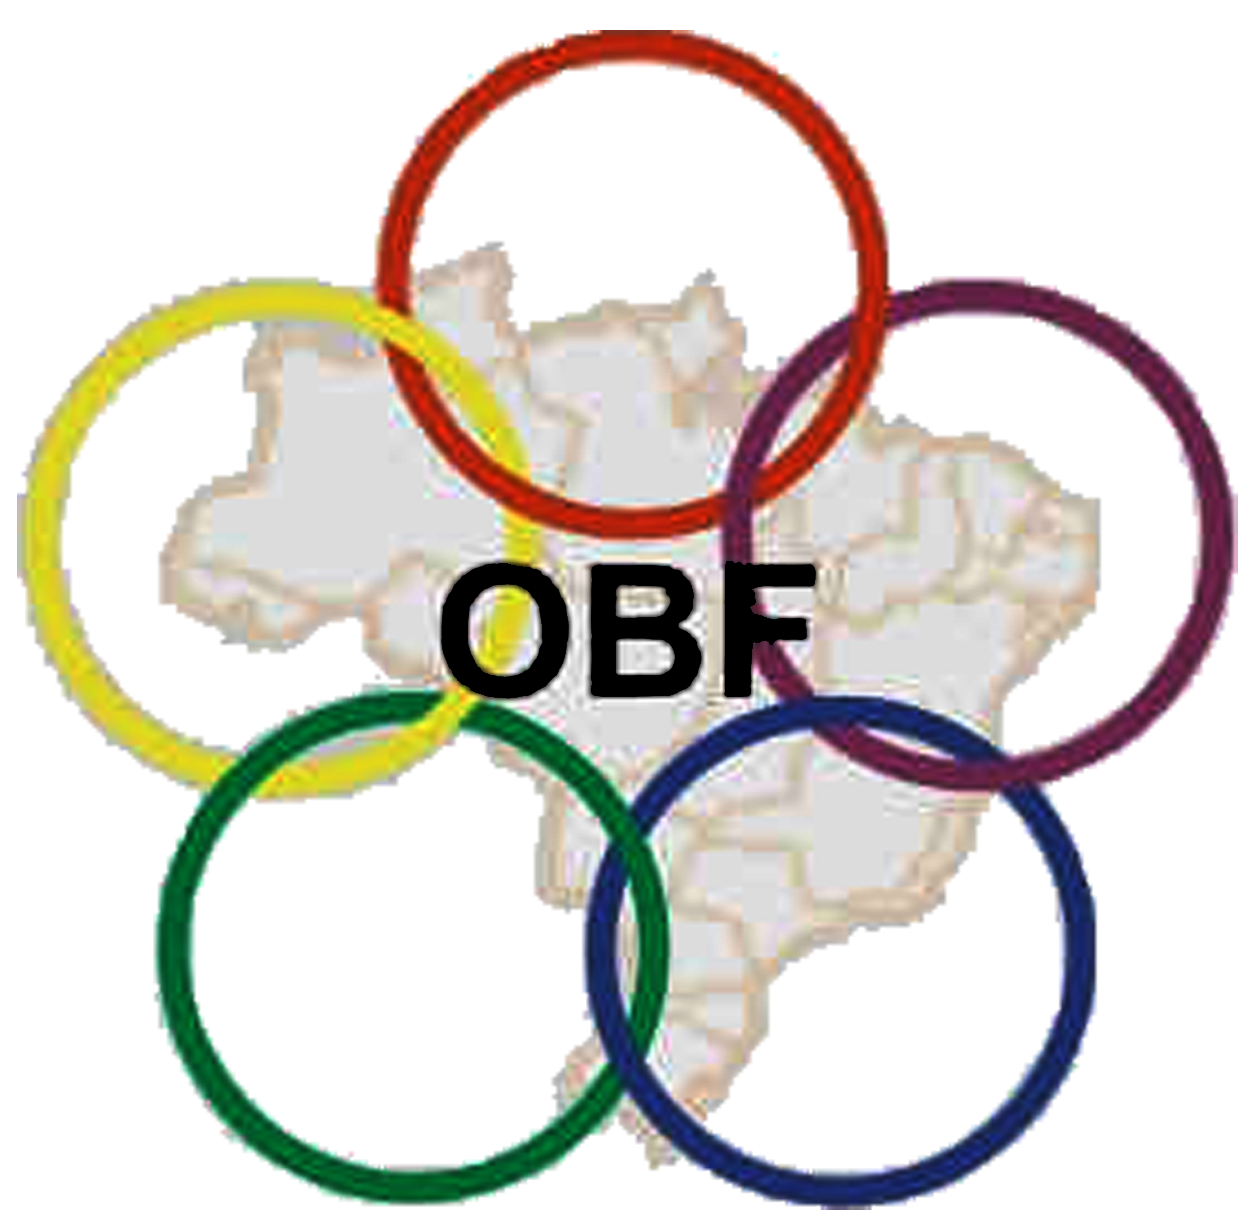 olimpiadas logo obf